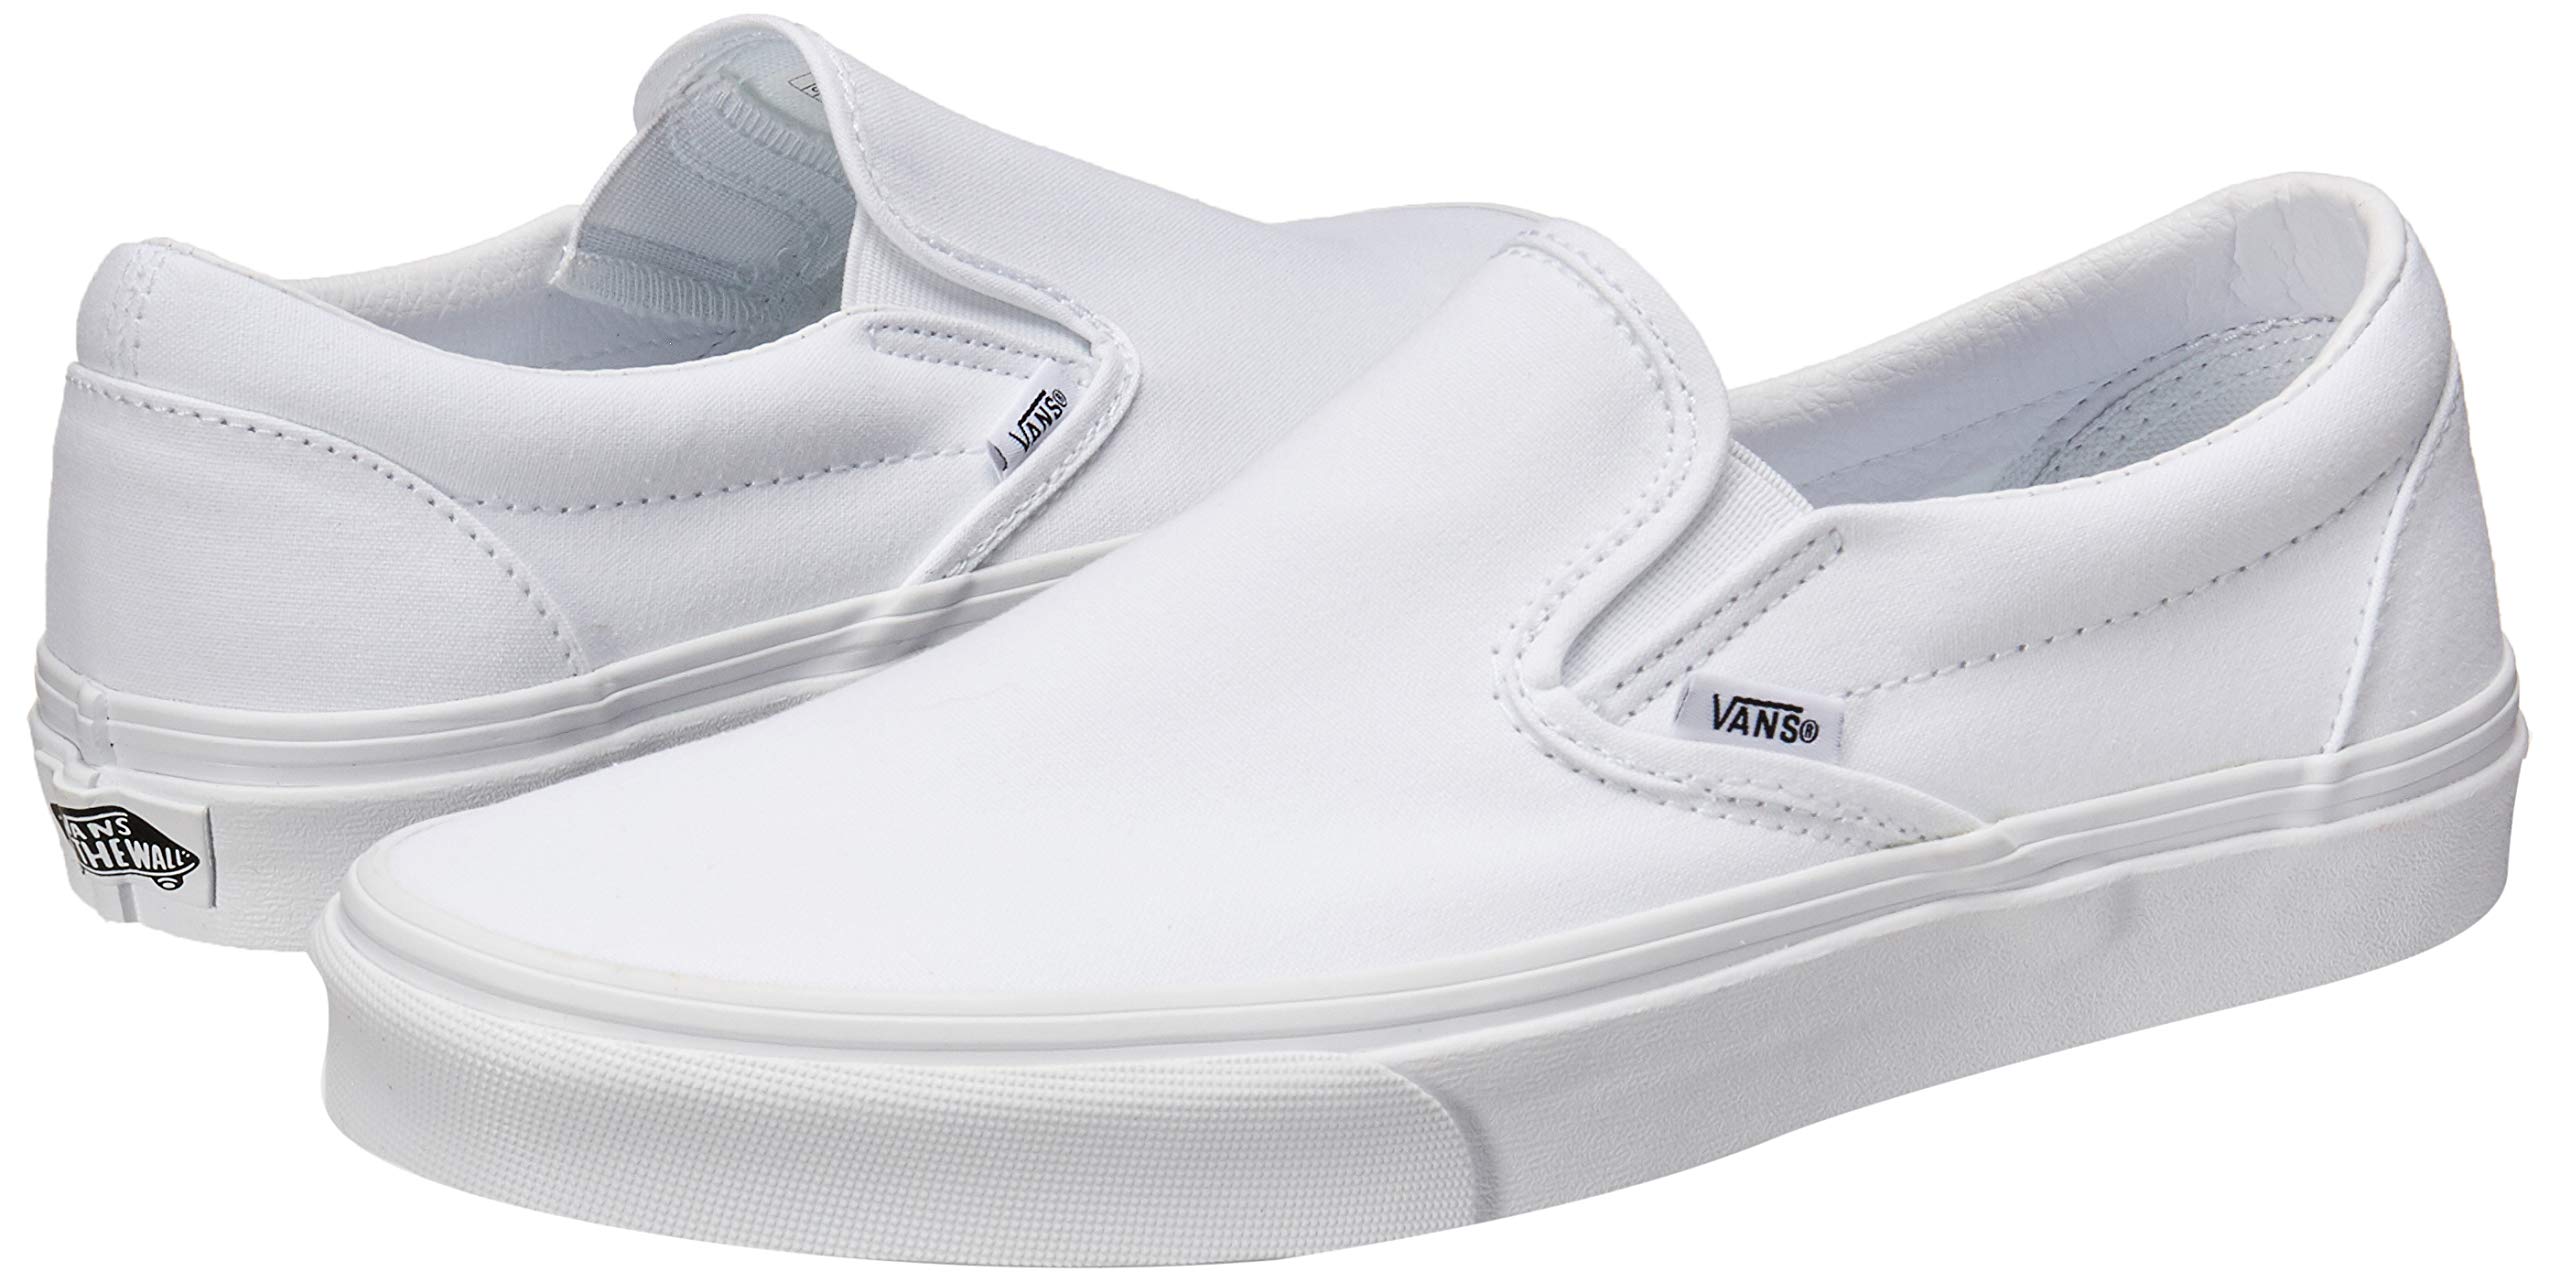 Vans Unisex-Adult Classic Slip on Sneaker